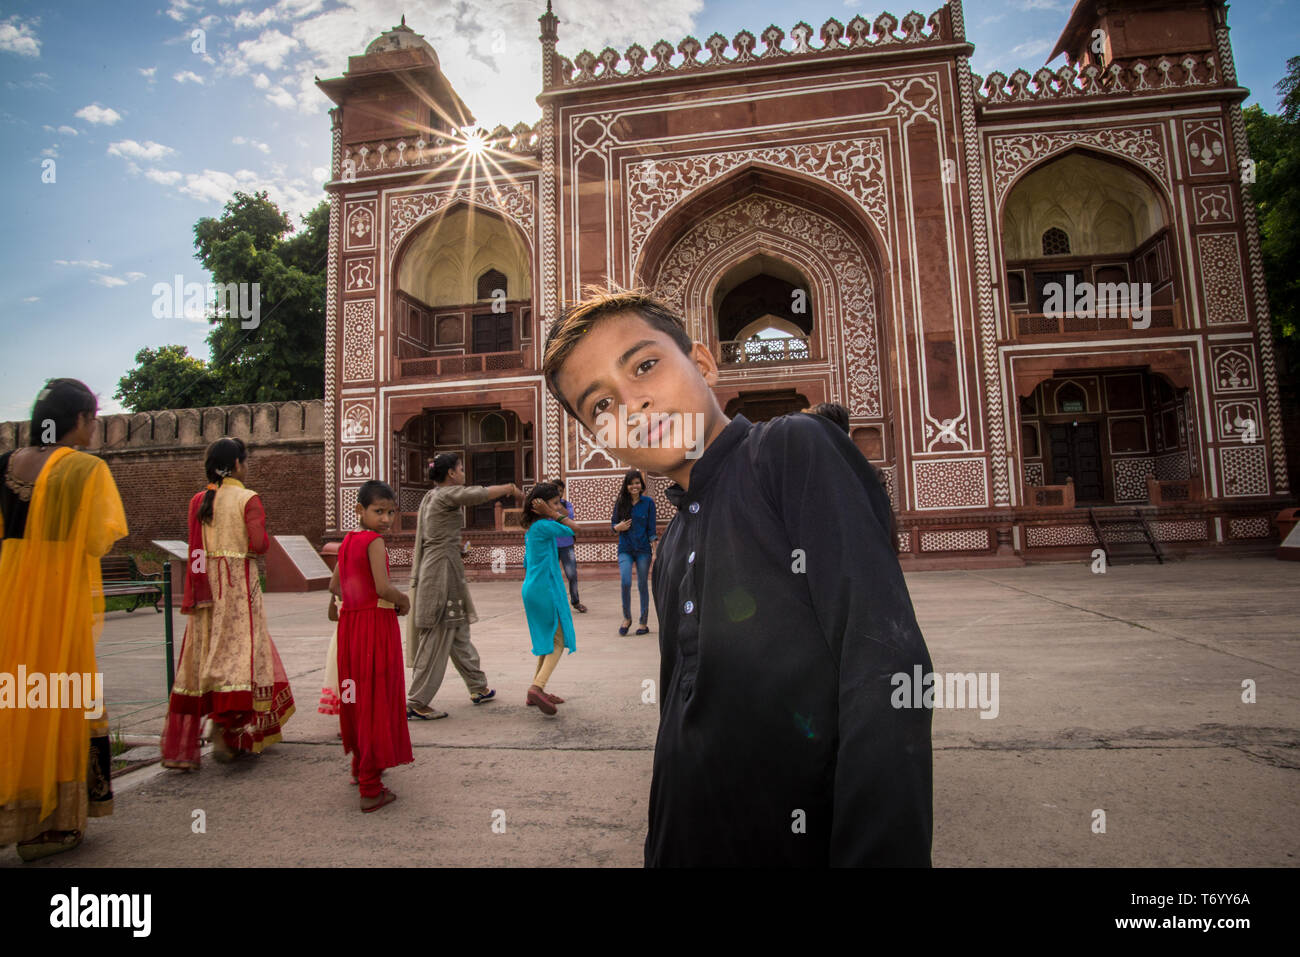 Kind außerhalb der Tempel, Indien Stockfoto